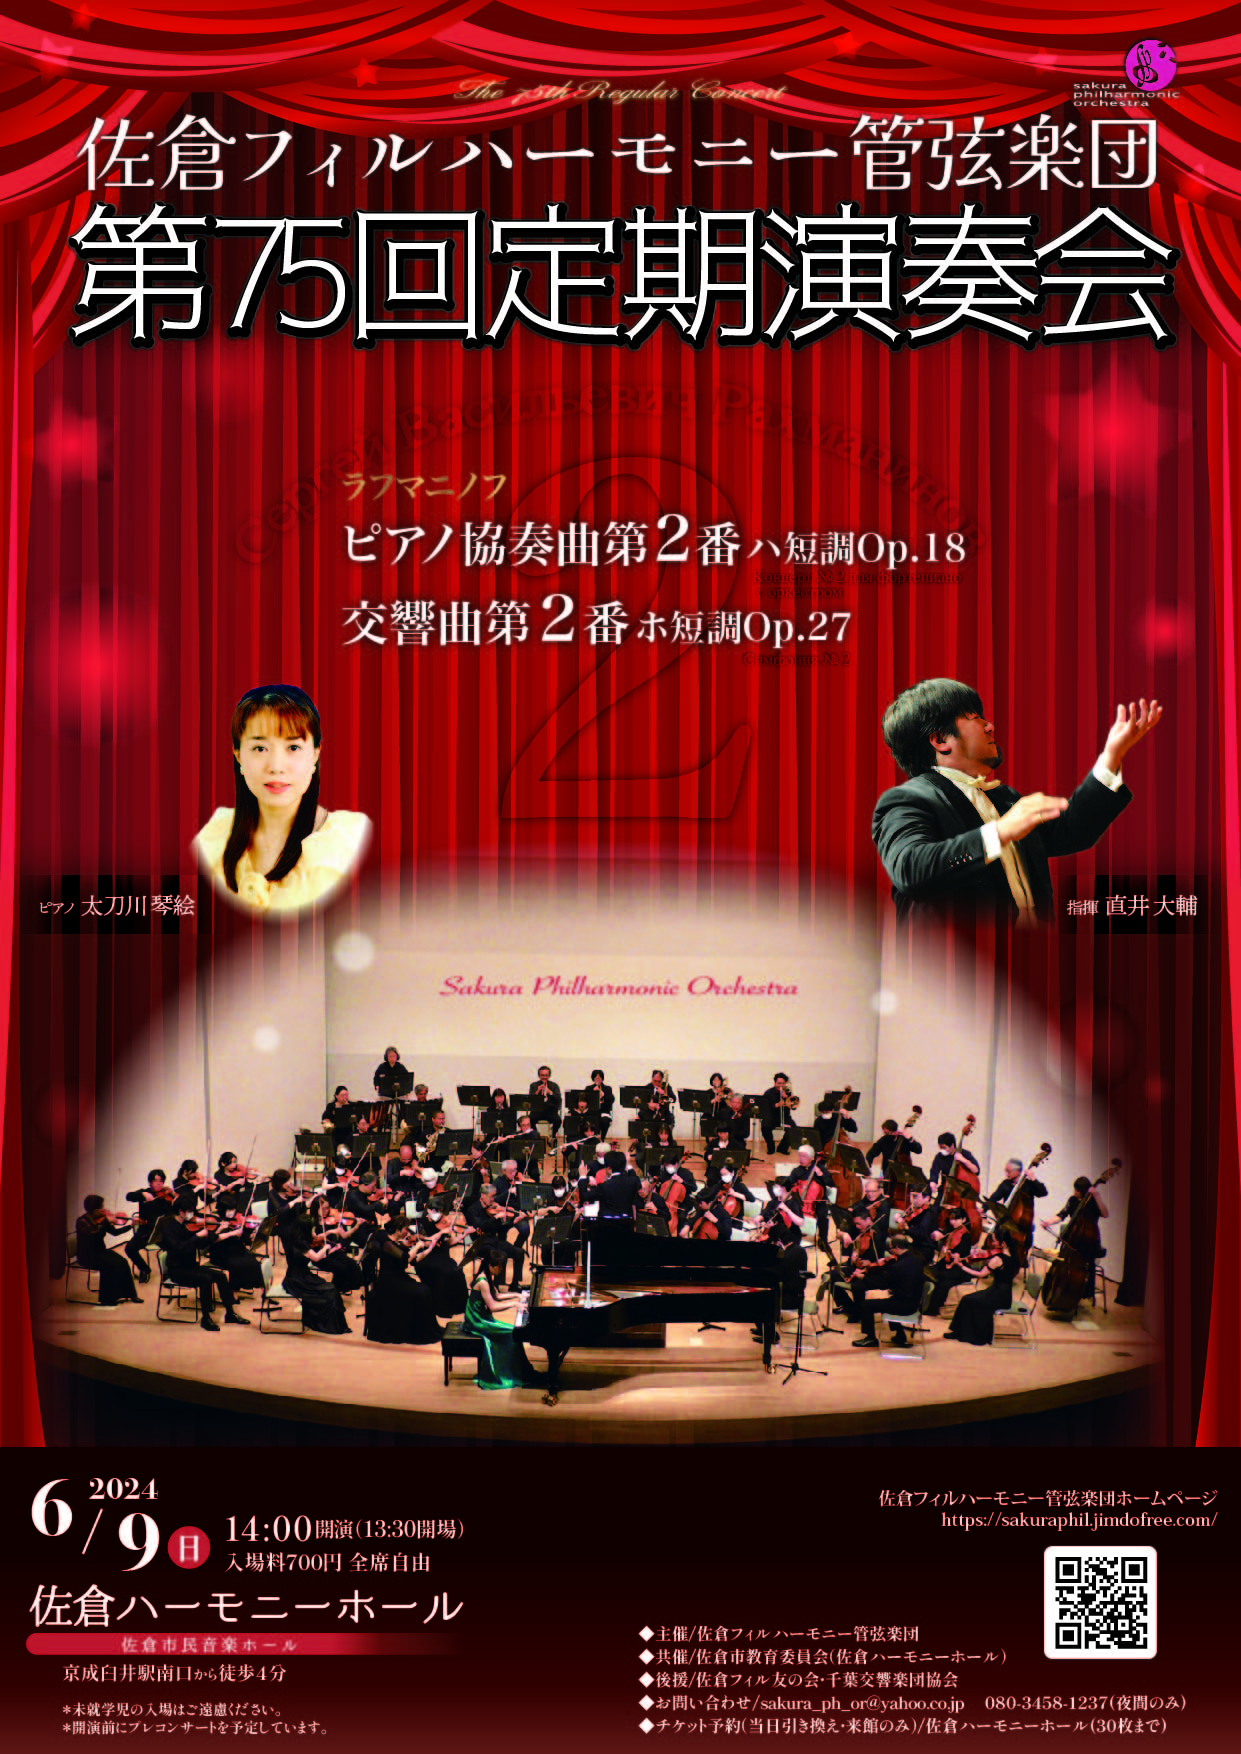 Sakura Philharmonic Orchestra The 75th Regular Concert